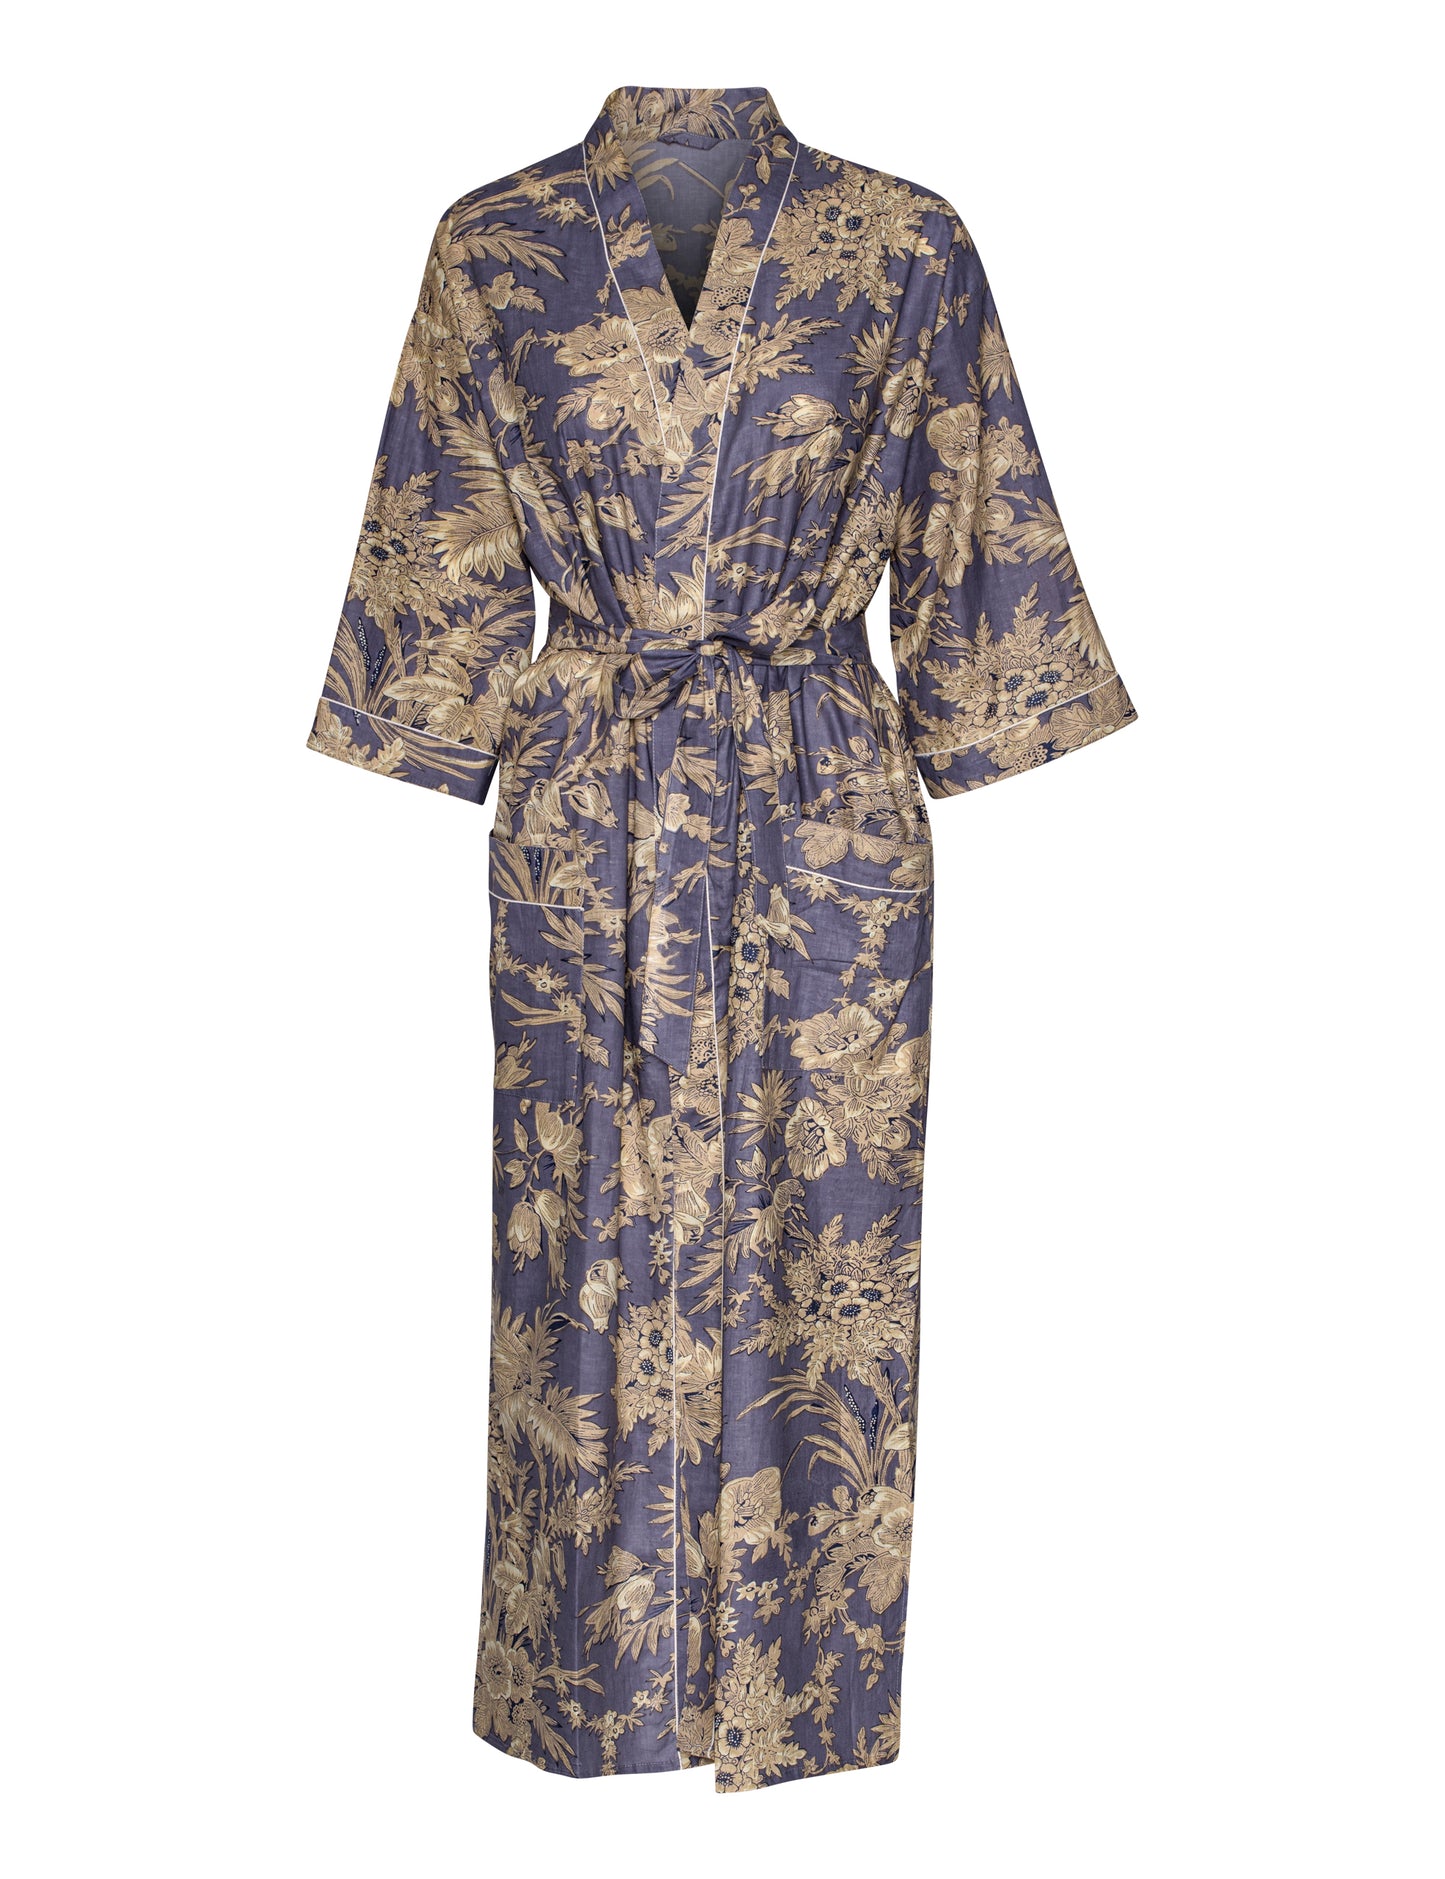 Bath robe / Kimono